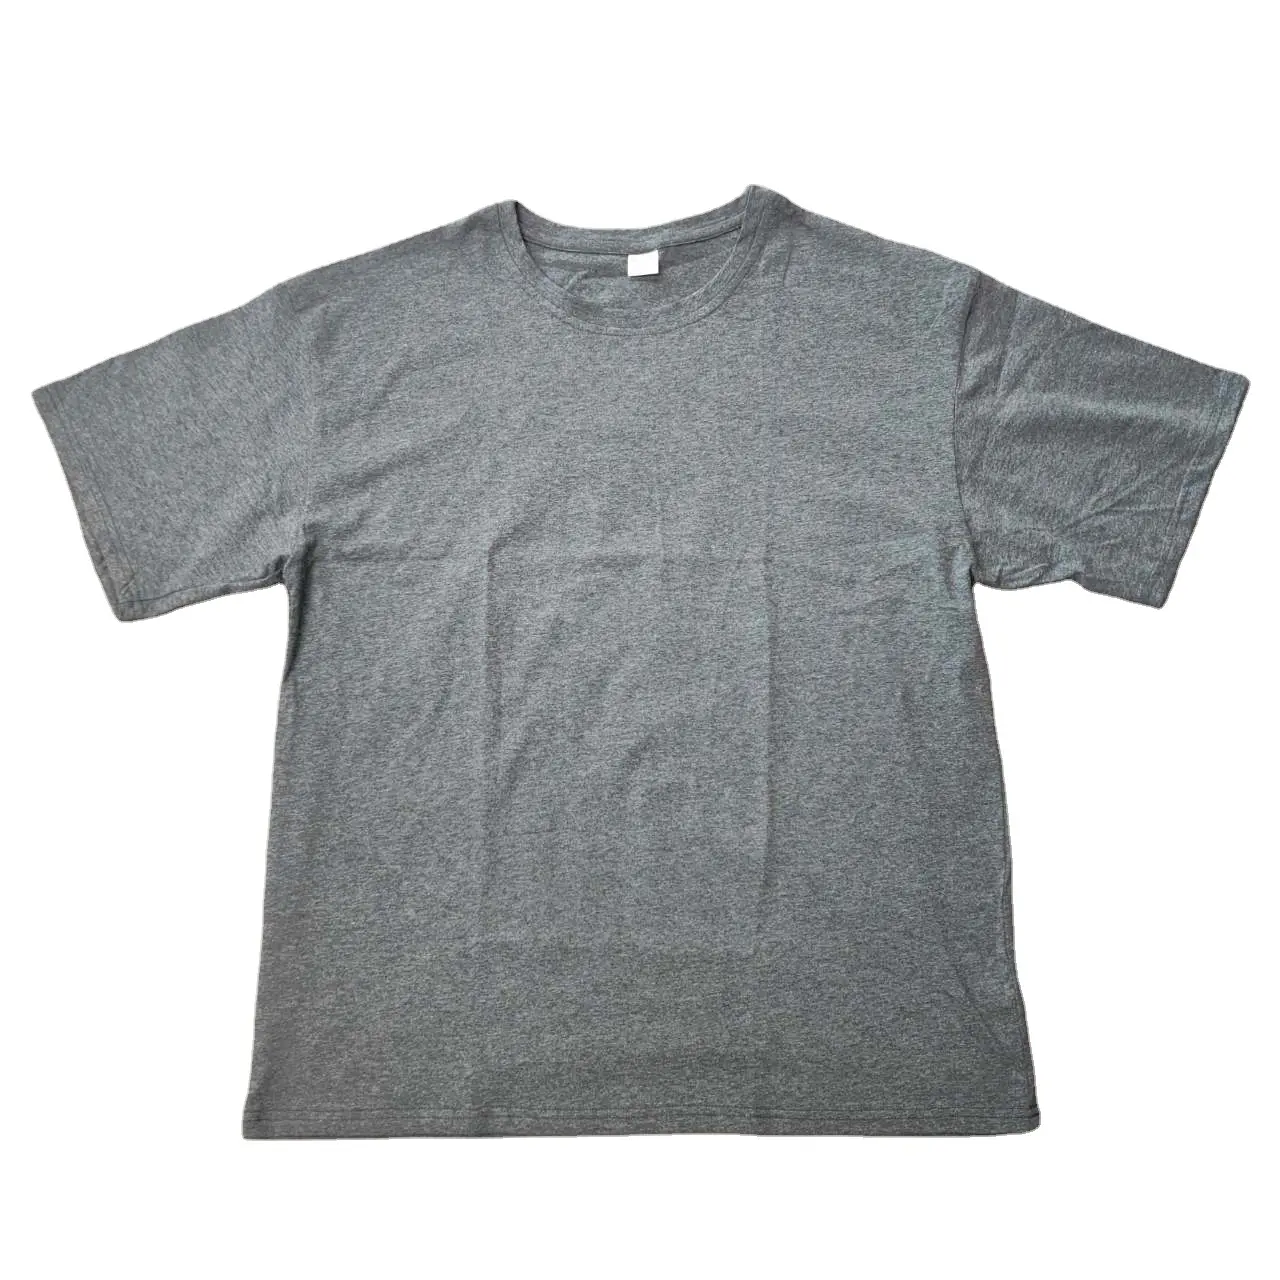 TS2183ヘビーgsm綿100% 高品質TシャツシルクスクリーンプリントカスタムTシャツカスタムラベルプリントTシャツ男性用